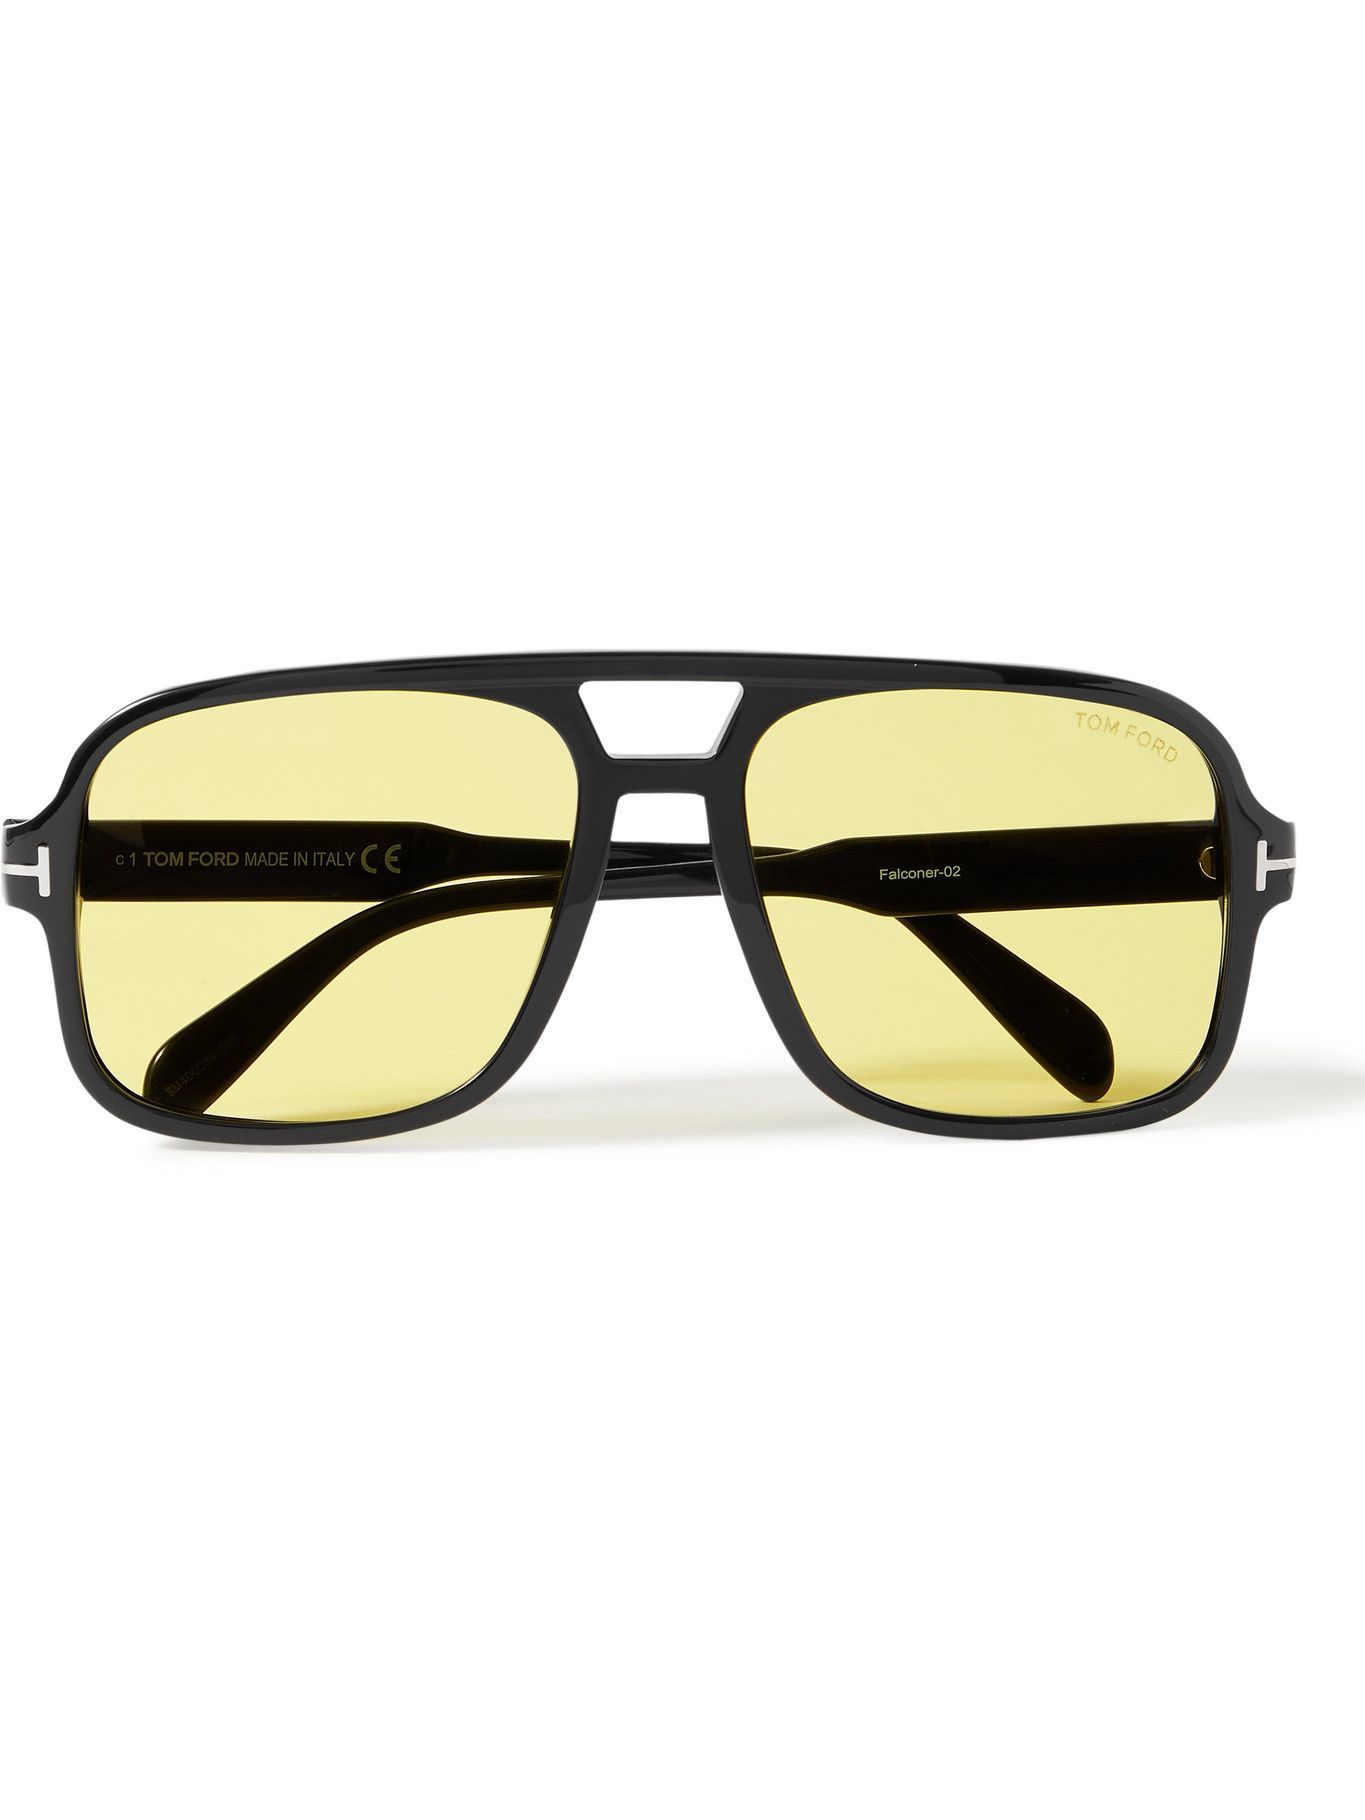 TOM FORD - Aviator-Style Tortoiseshell Acetate Sunglasses TOM FORD